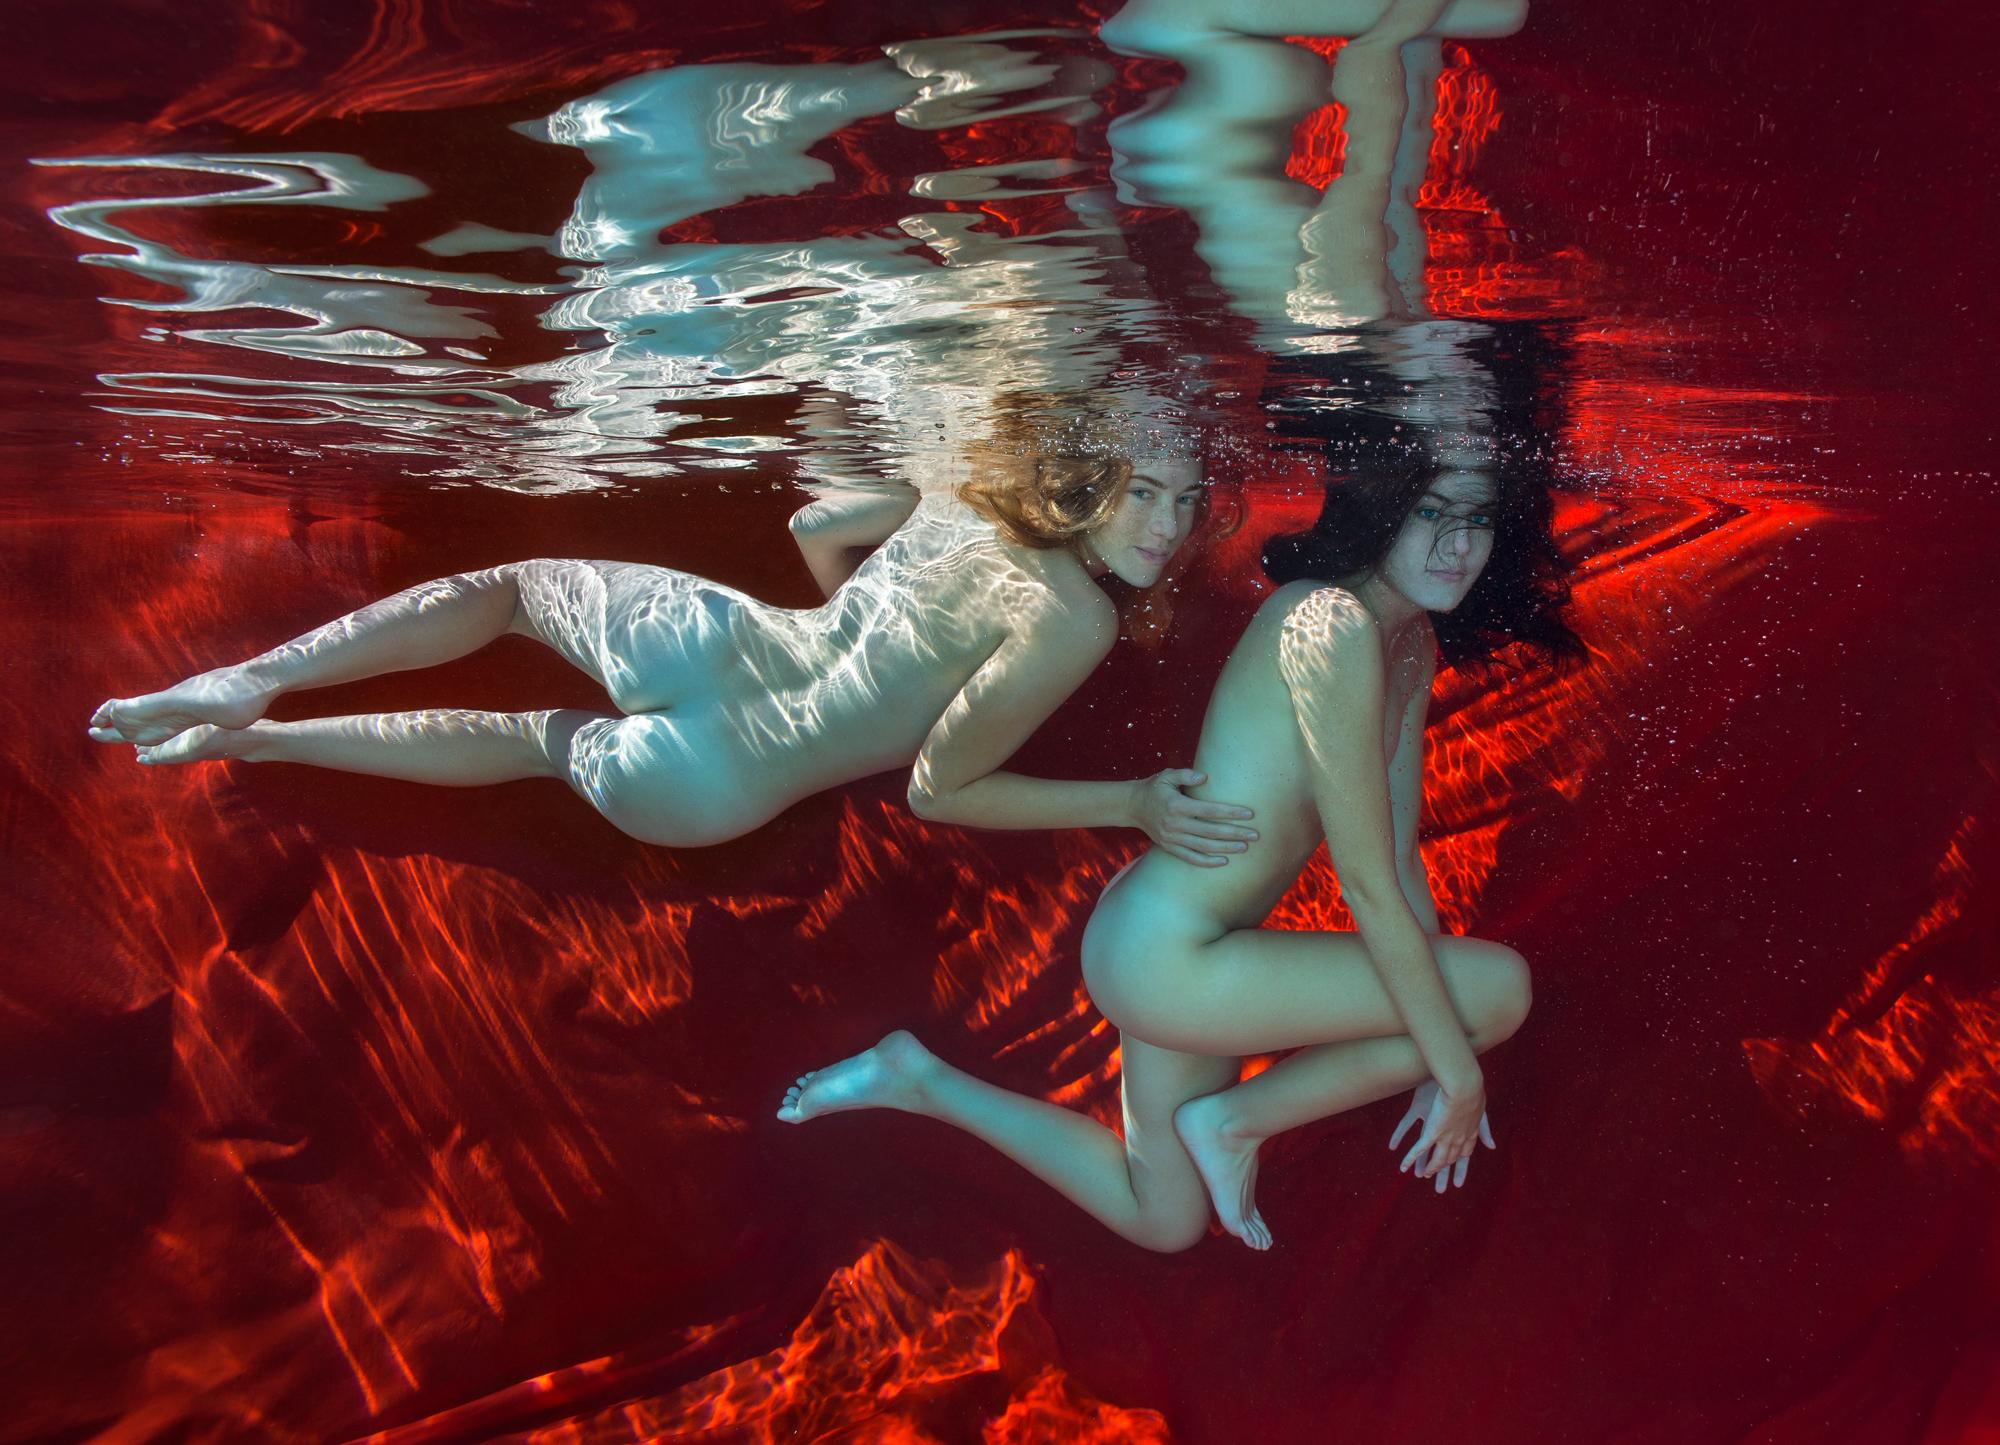 Golden Drops - underwater nude photograph - archival pigment print 18x24"